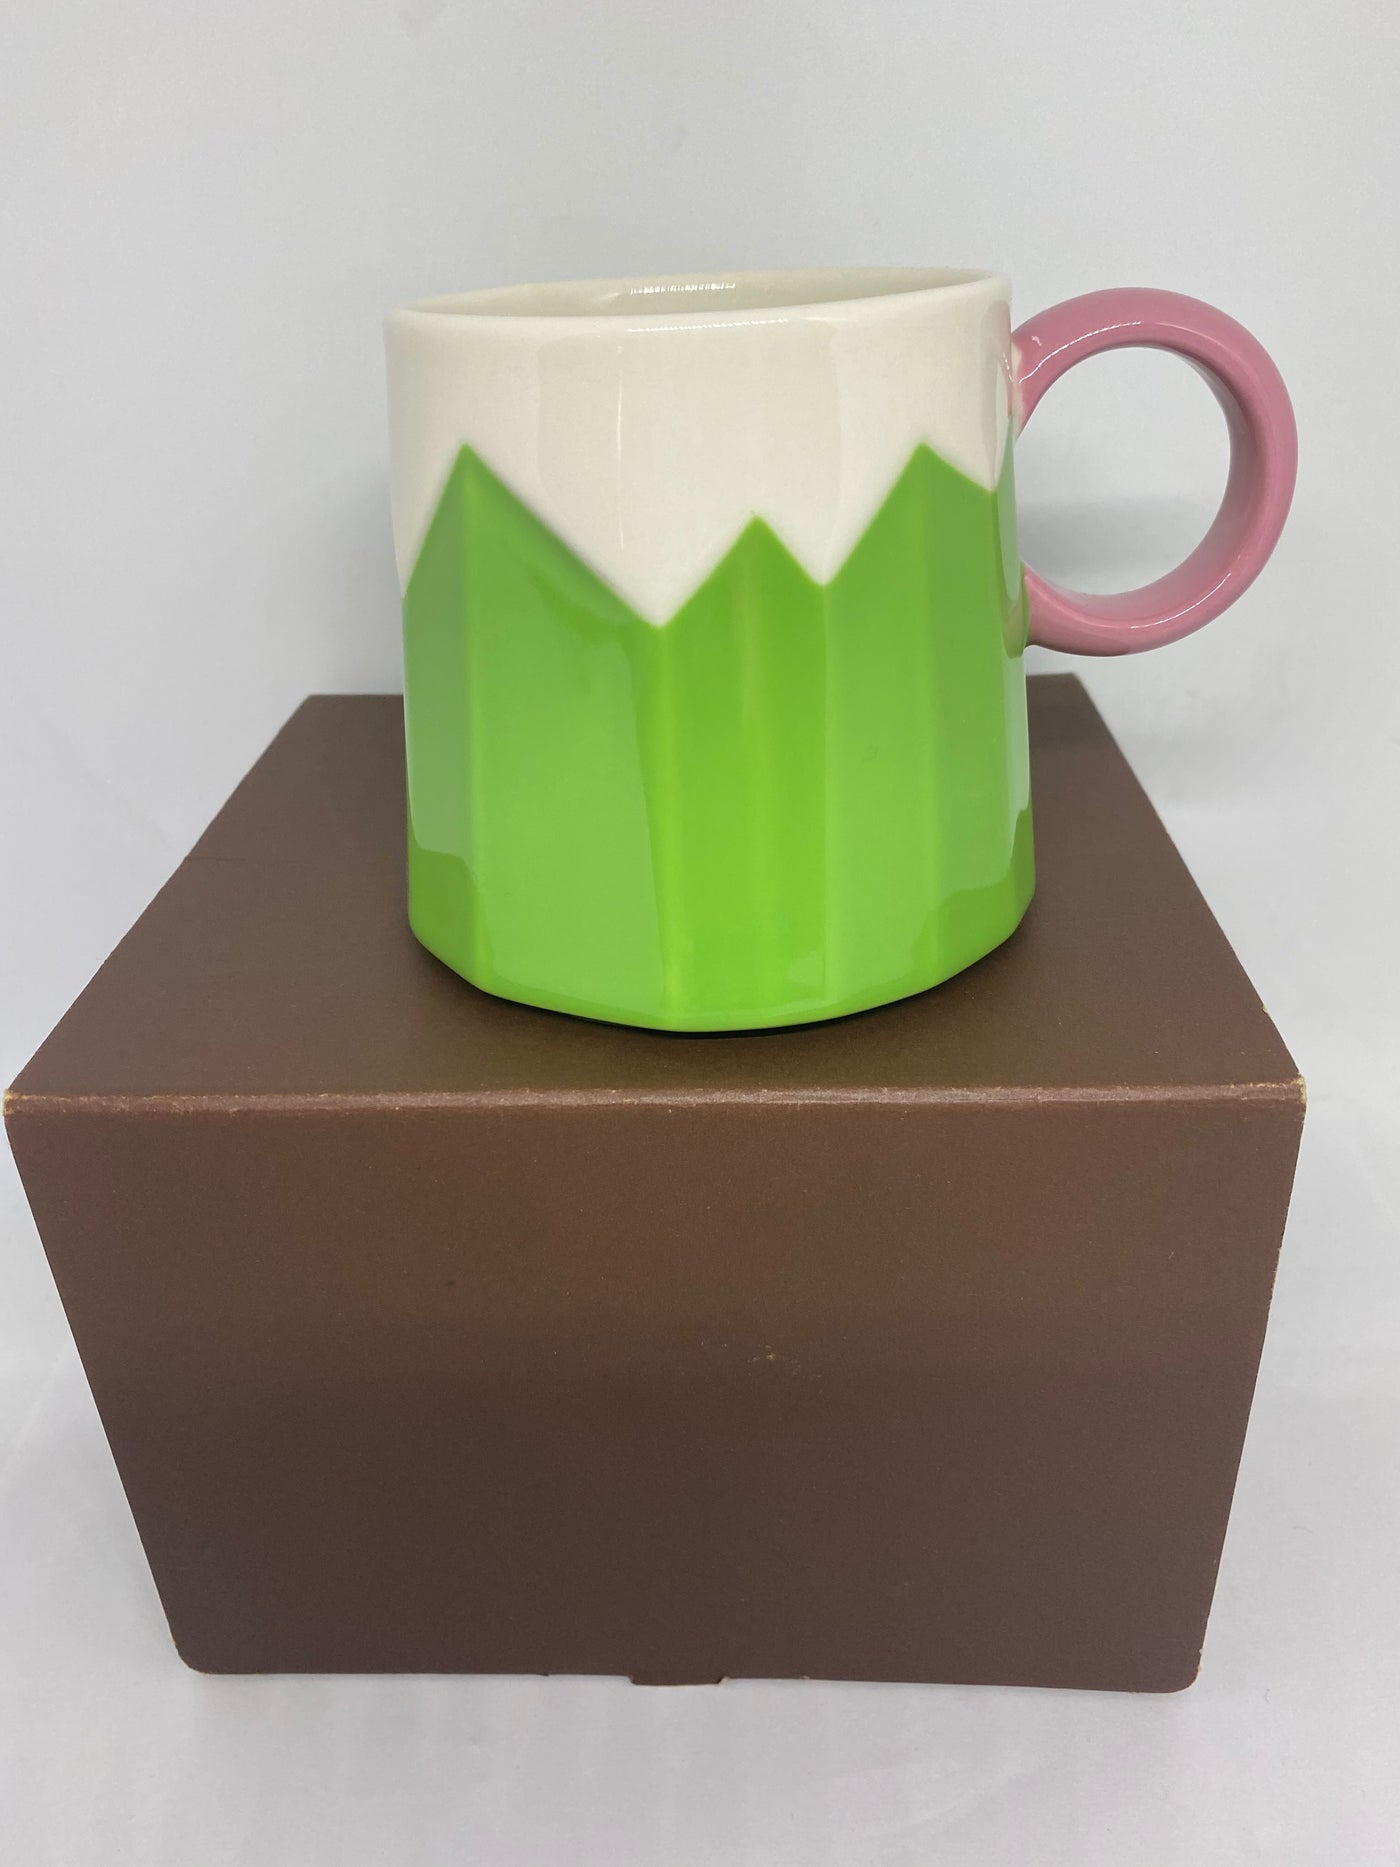 Starbucks Japan 2020 Mountain Fuji Limited Coffee Mug New with Box